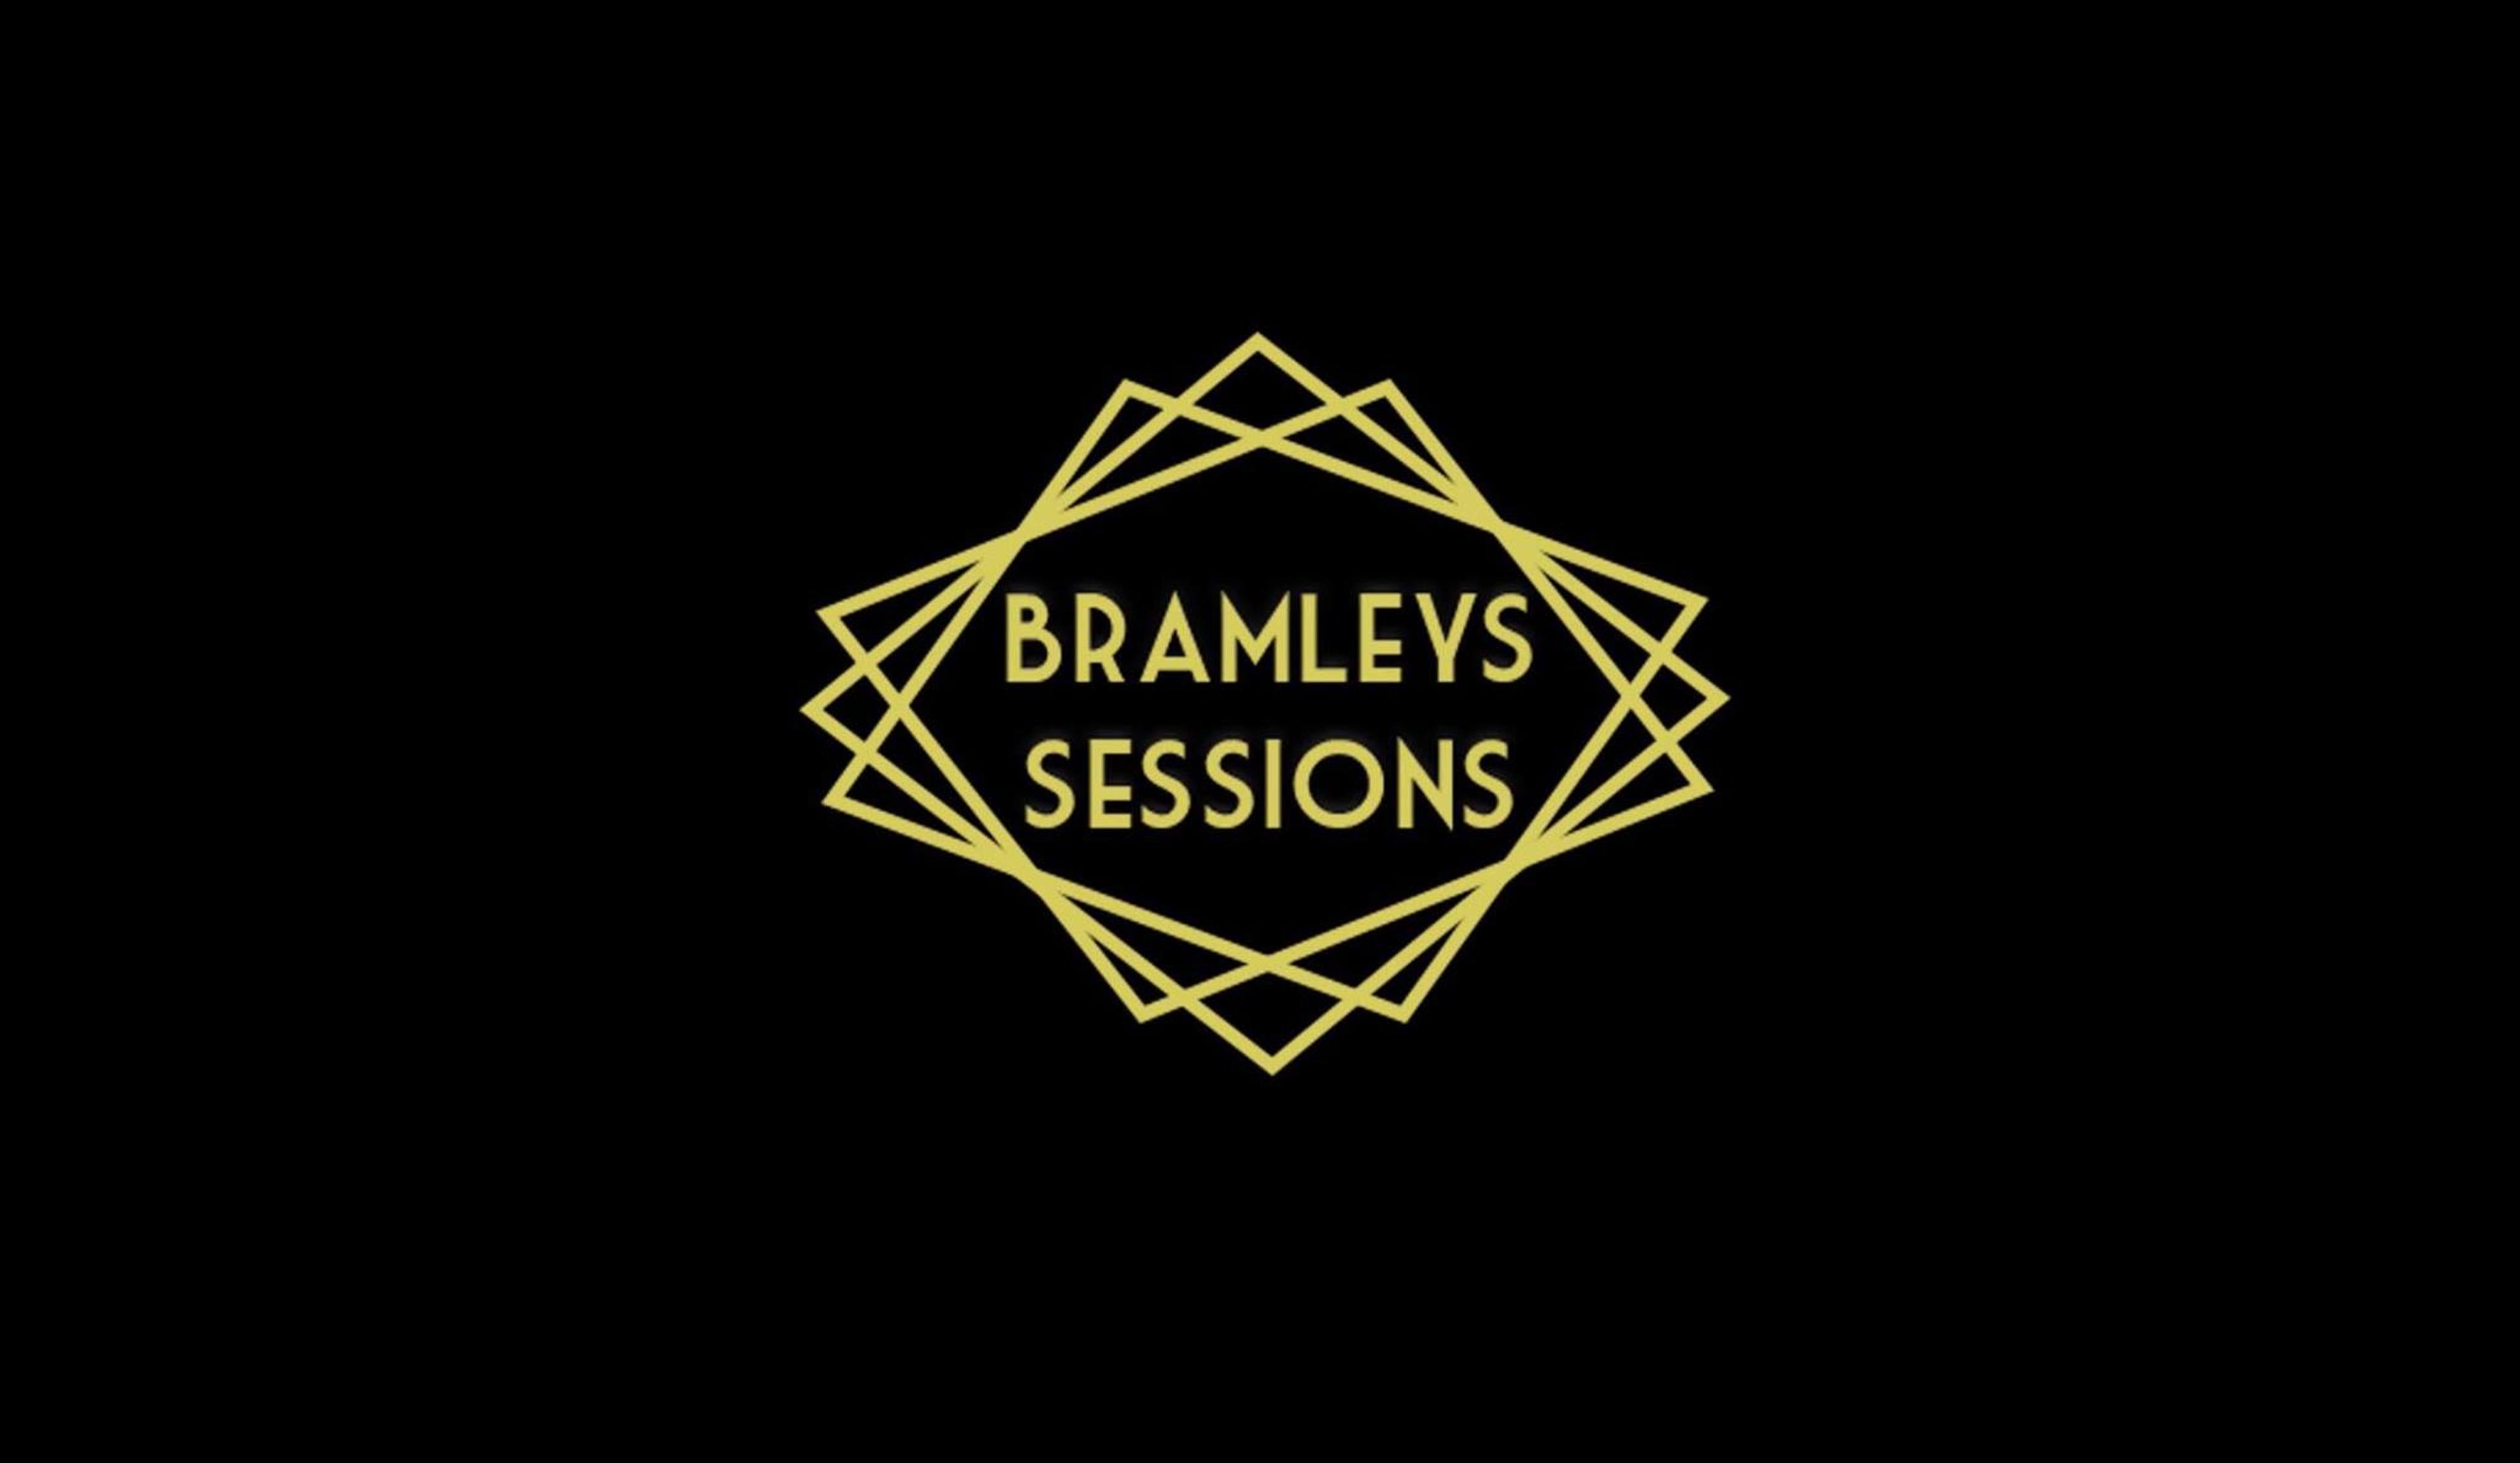 The Bramleys Sessions henry madd